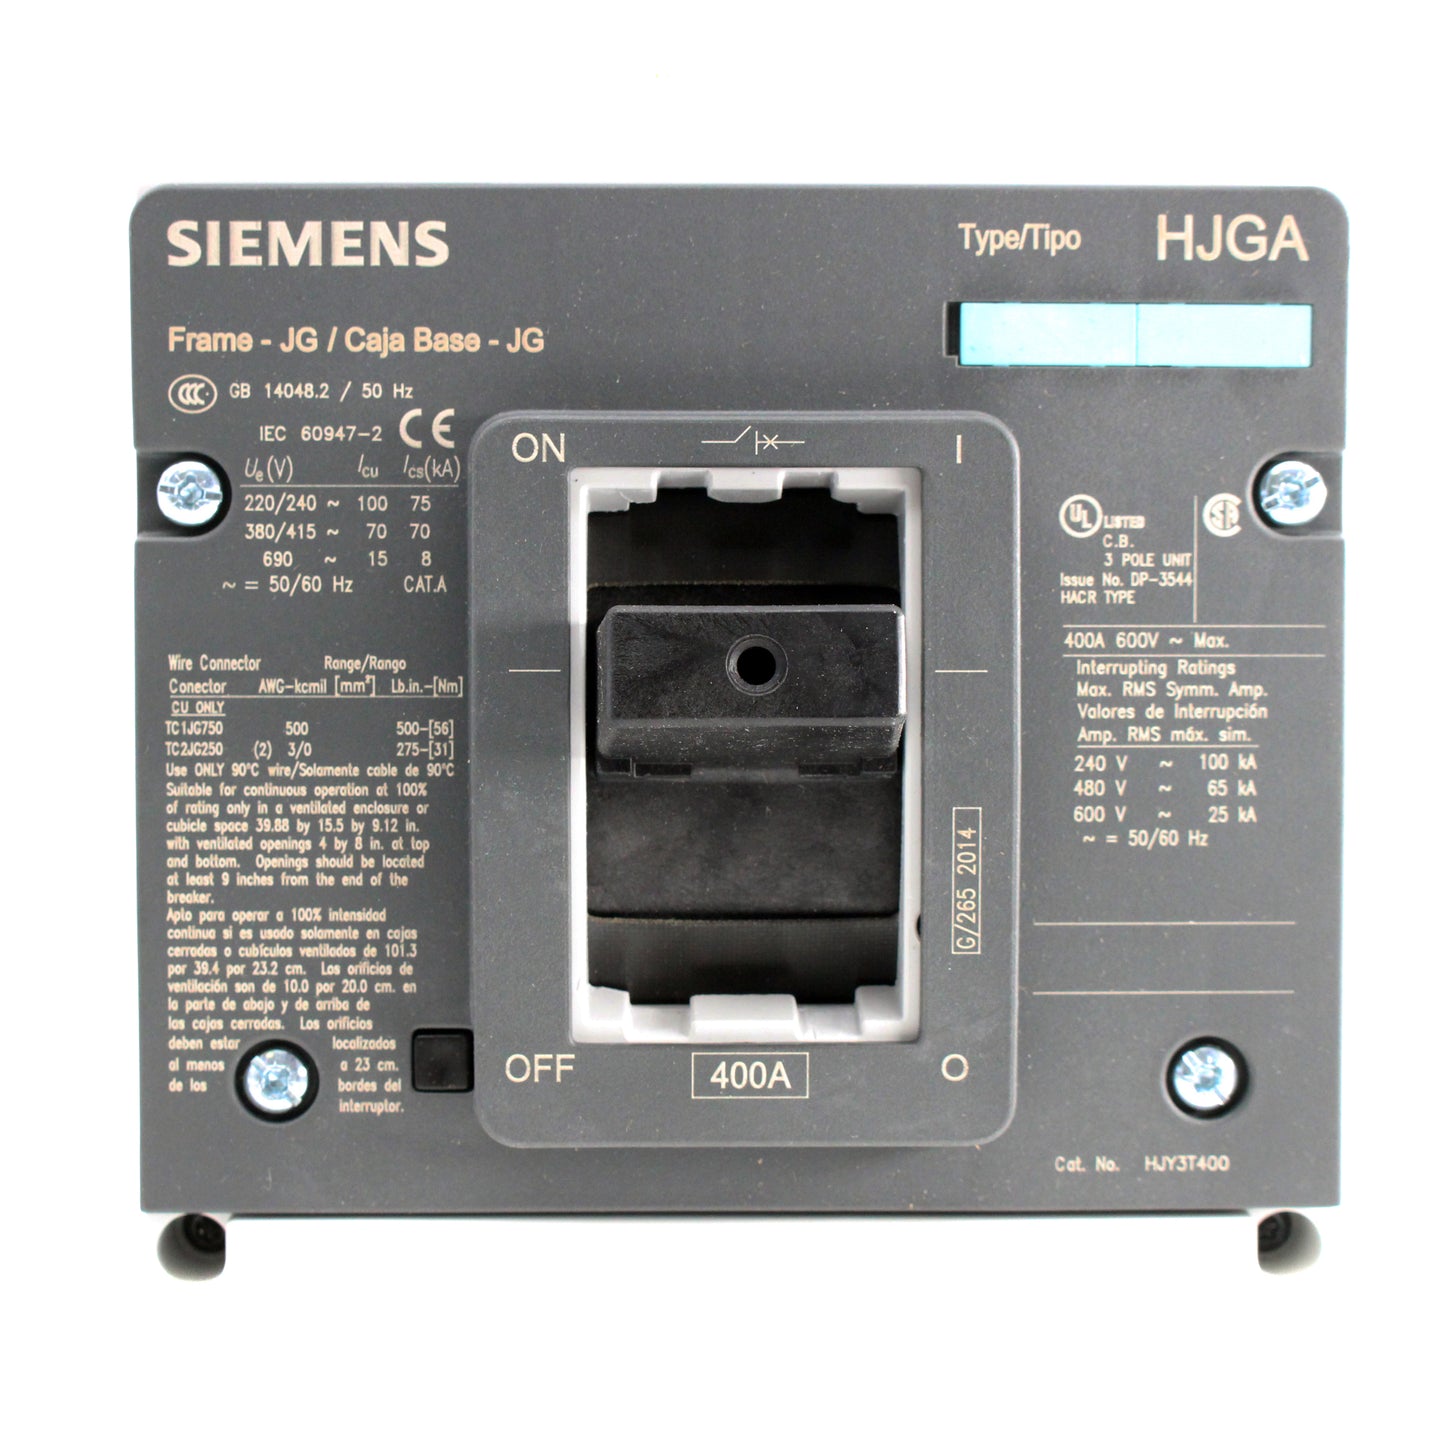 Siemens HJY3T400